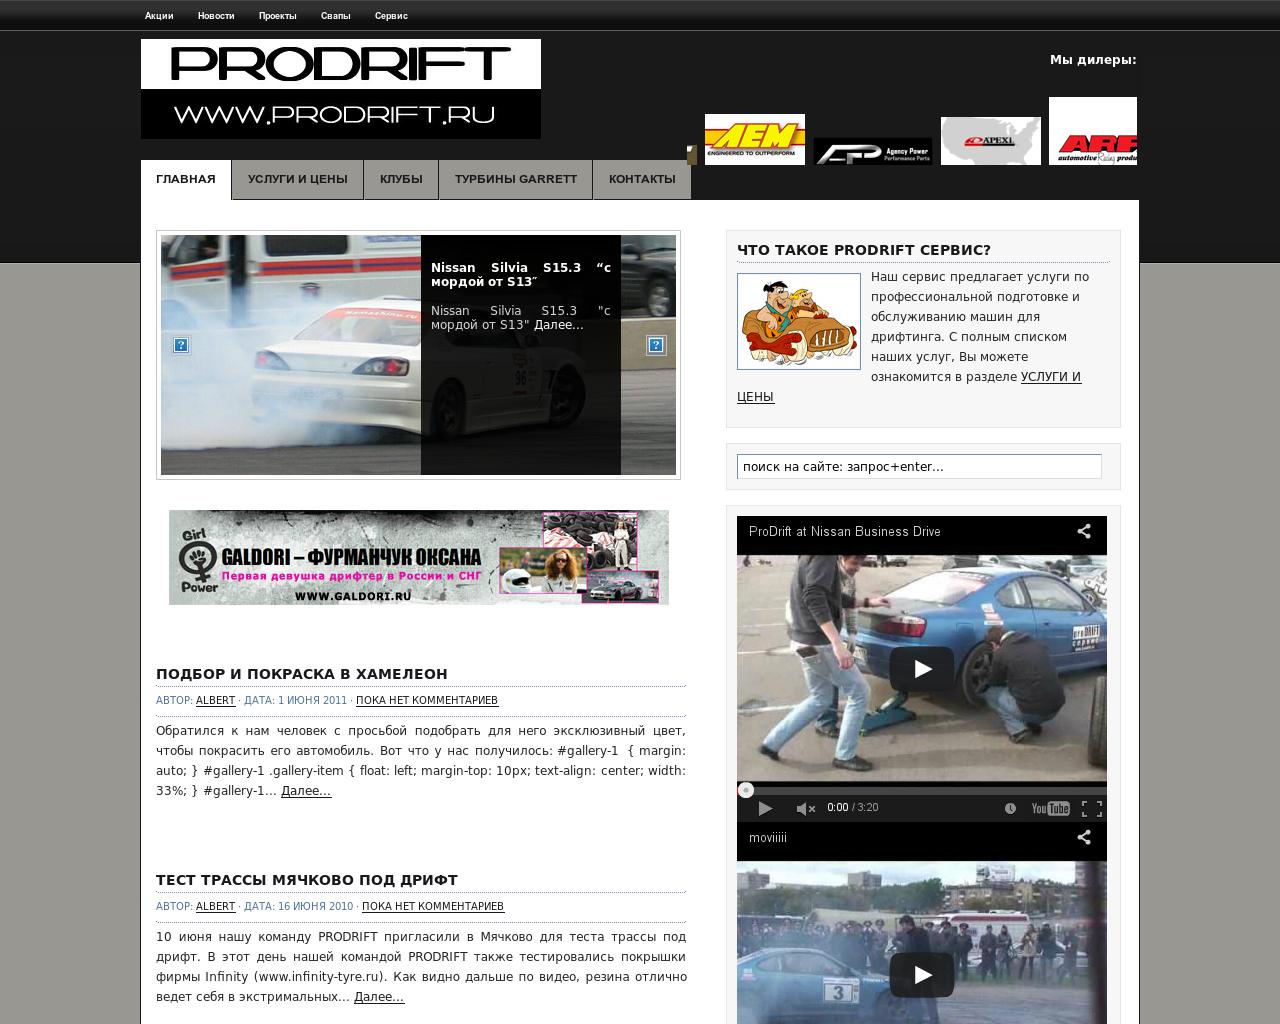 Изображение сайта prodrift.ru в разрешении 1280x1024